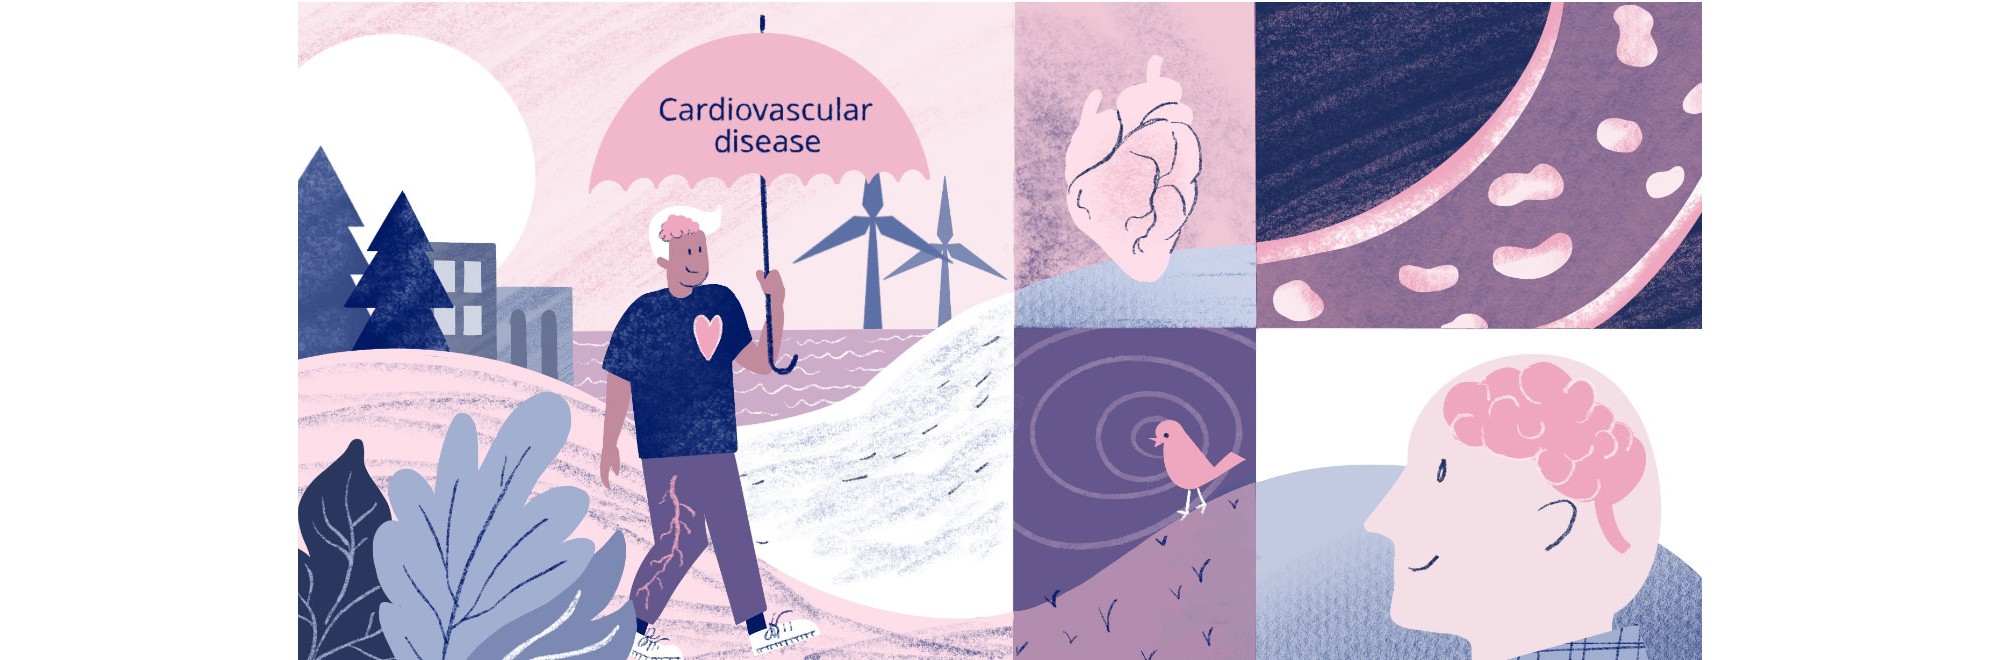 Understanding cardiovascular disease